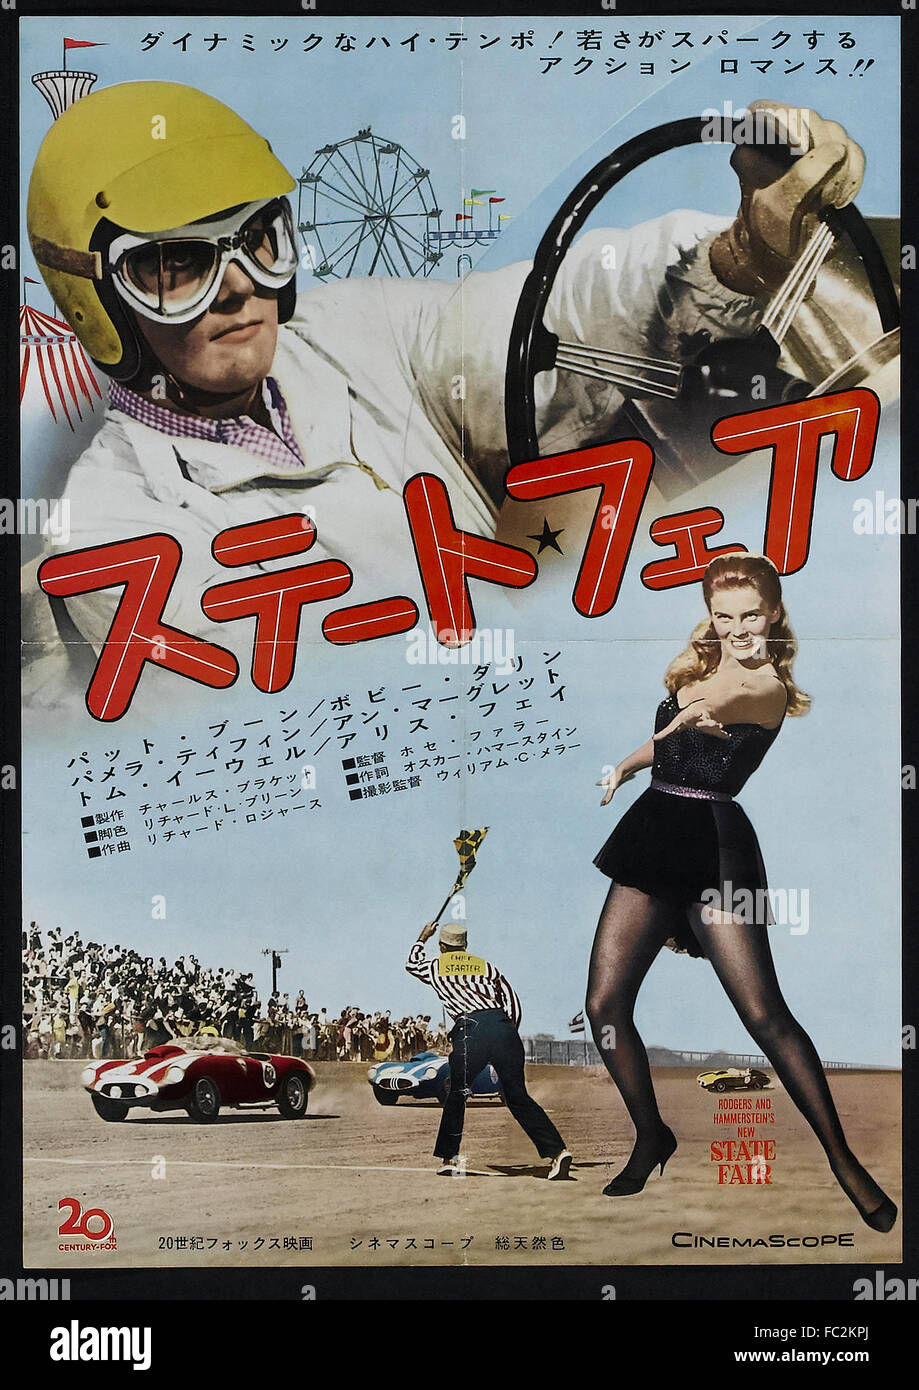 State Fair (1962) - Japanese Movie Poster Stock Photo